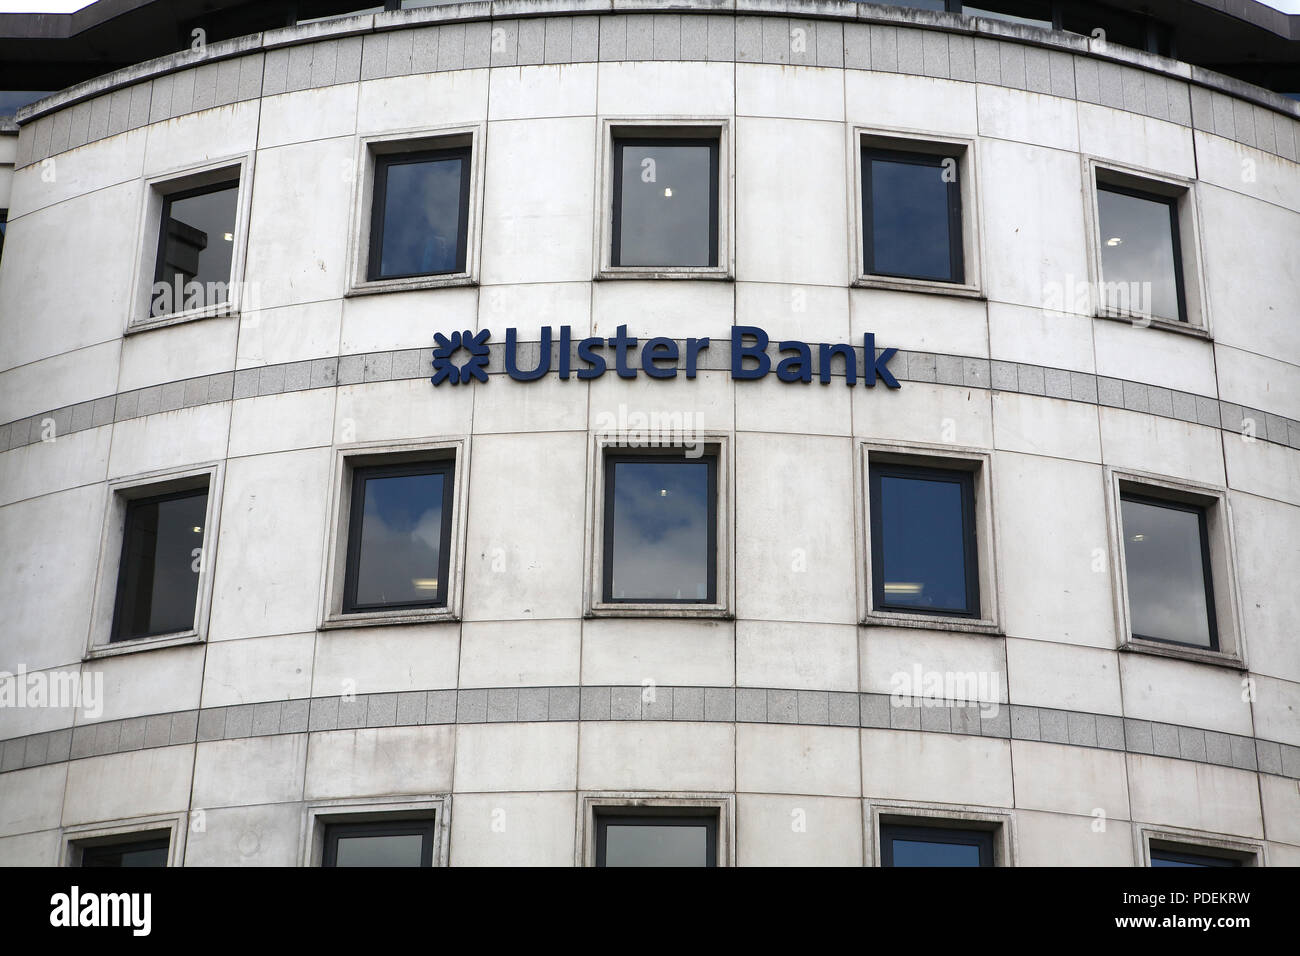 Ulster bank building dublin Stock Photo